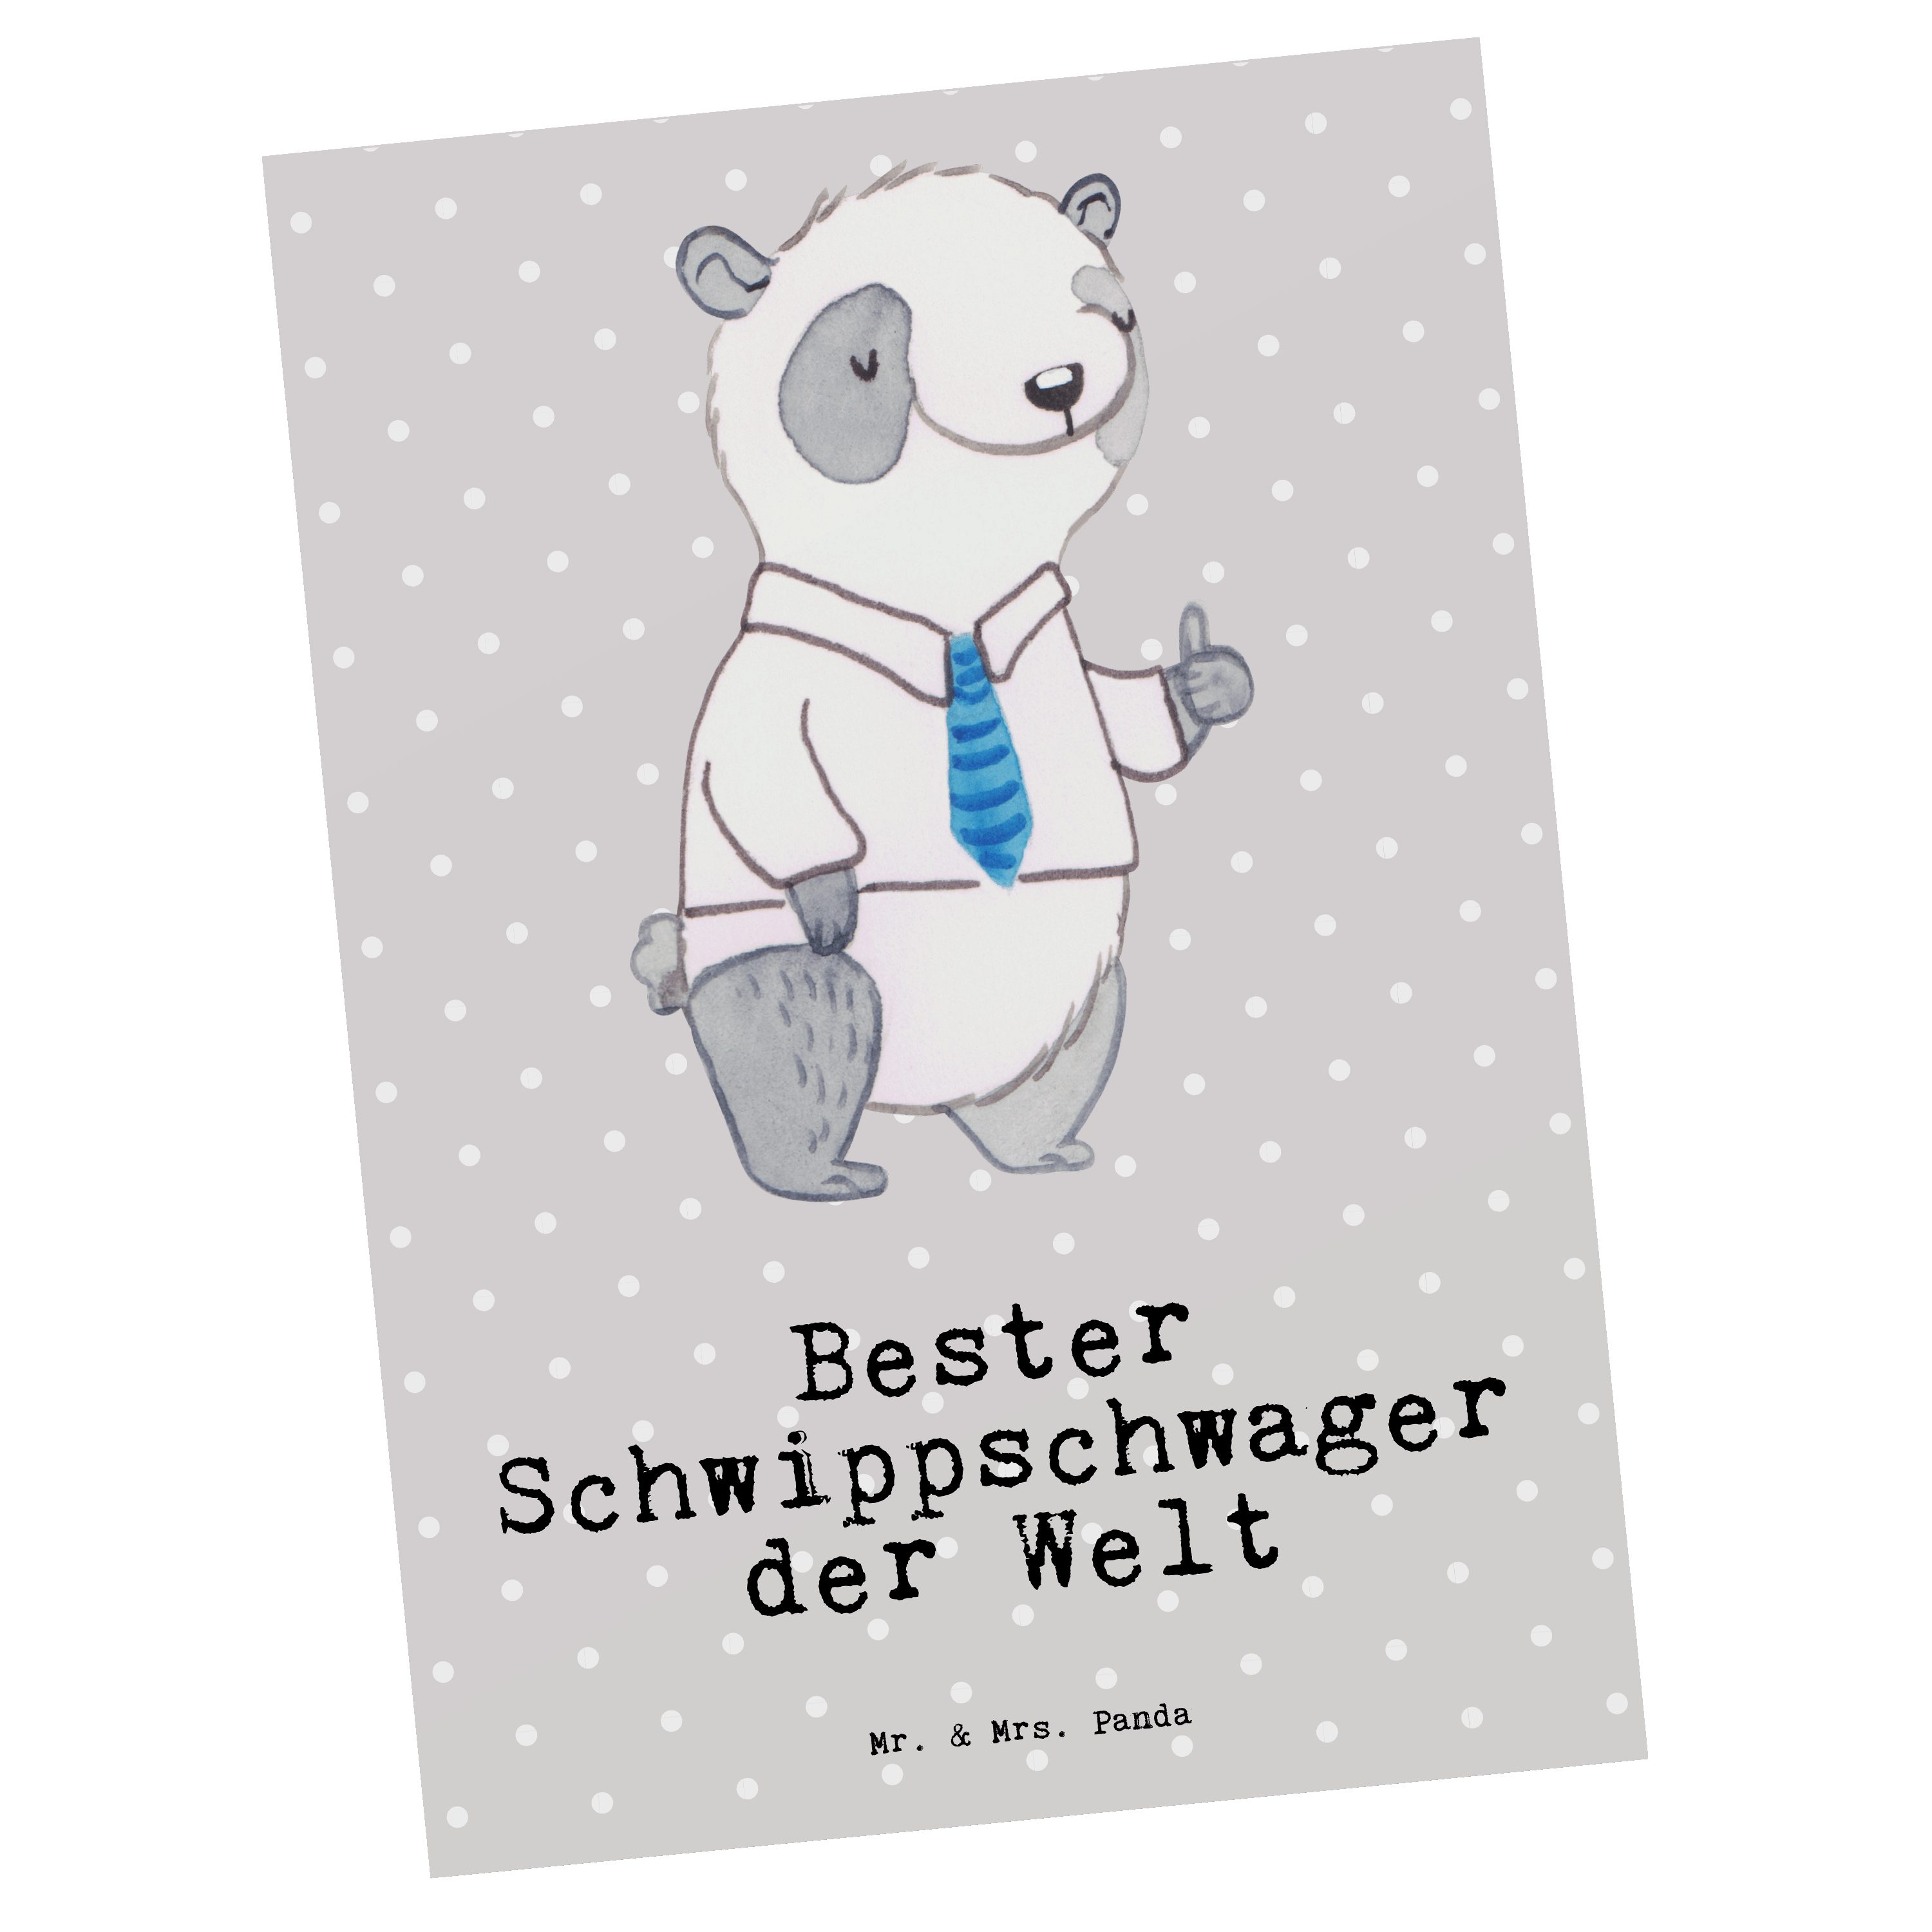 Mr. Gebu Panda Mrs. Panda Schwippschwager - Postkarte Welt Pastell Bester der - Geschenk, & Grau